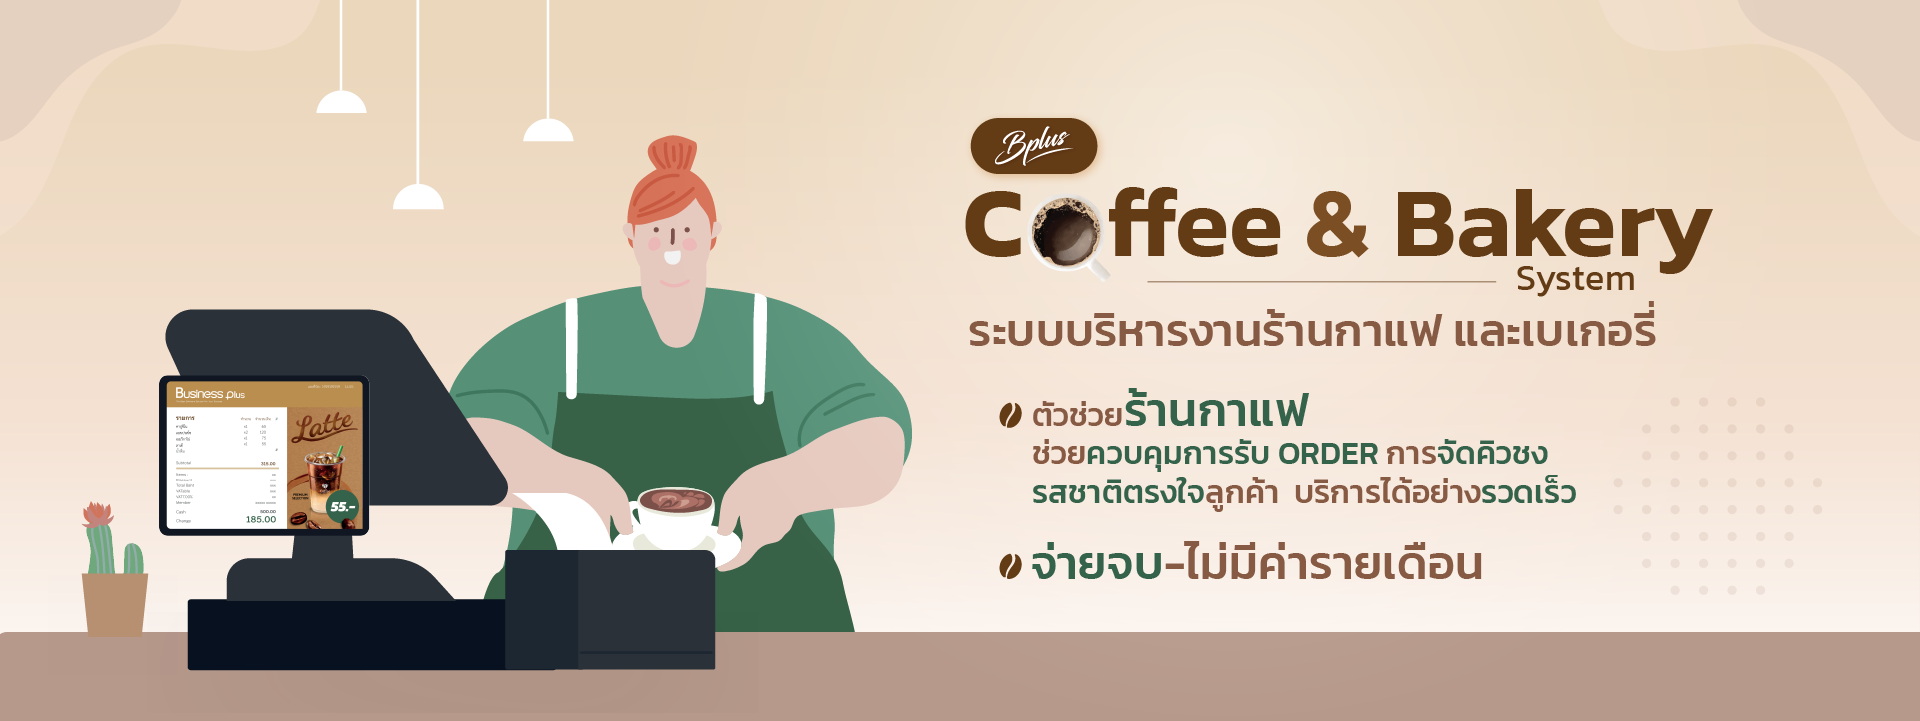 web-coffee-1.jpg